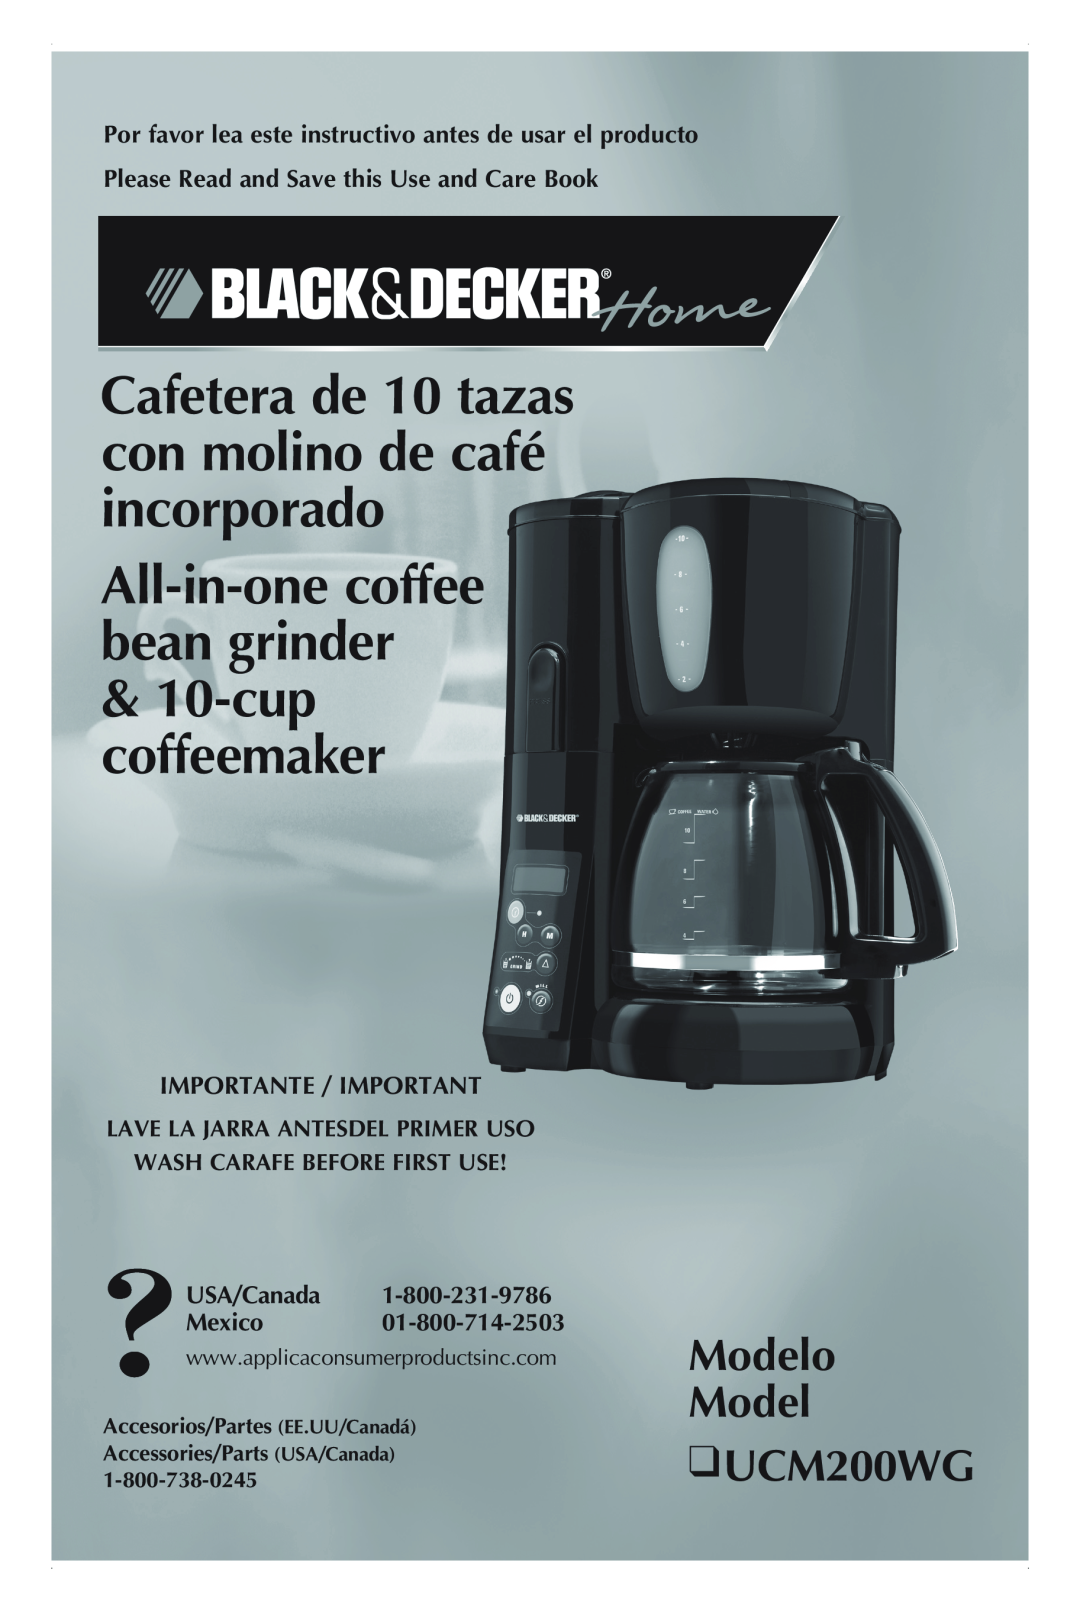 Black & Decker manual Modelo Model UCM200WG, All-in-onecoffee bean grinder &10-cupcoffeemaker, Importante / Important 